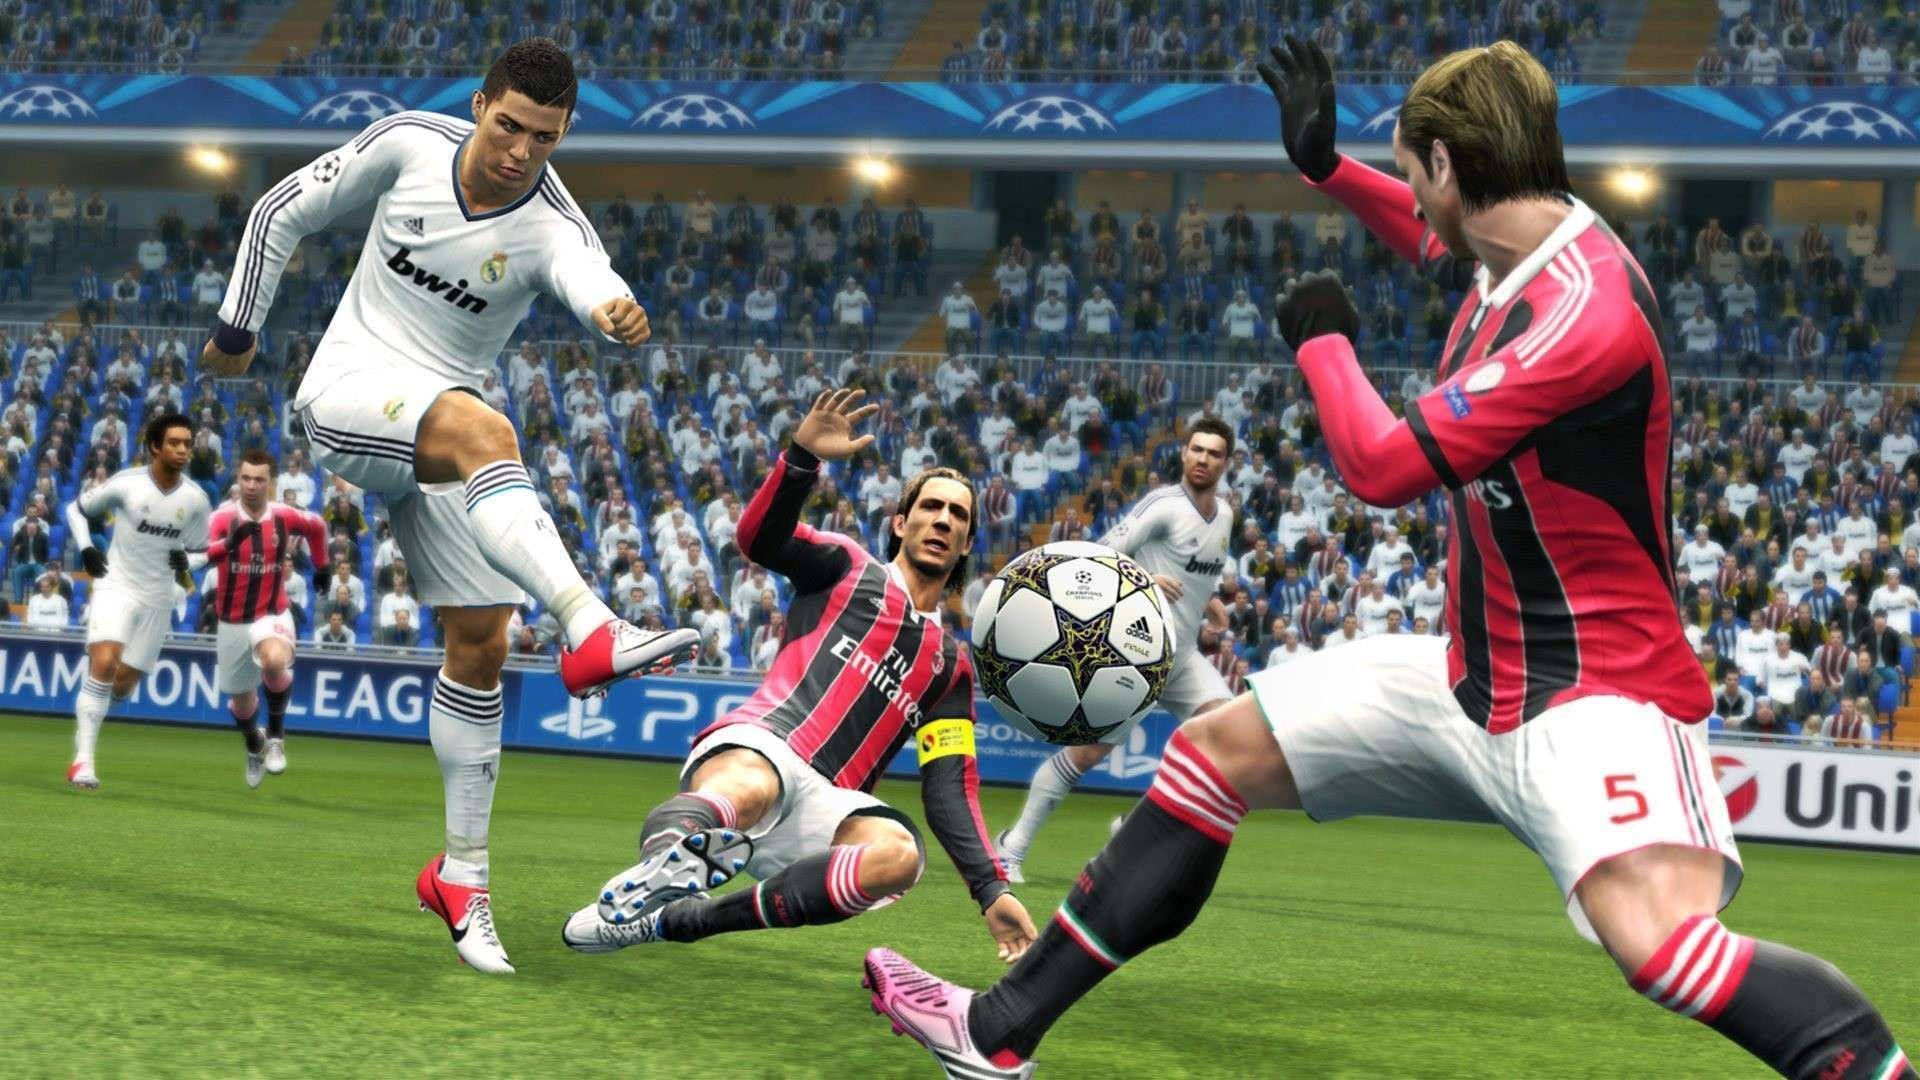 Fifa soccer. Pro Evolution Soccer 2013. PLAYSTATION 3 игры PES 2013. Pro Evolution Soccer 2016. Про эволютион СОККЕР 2013.